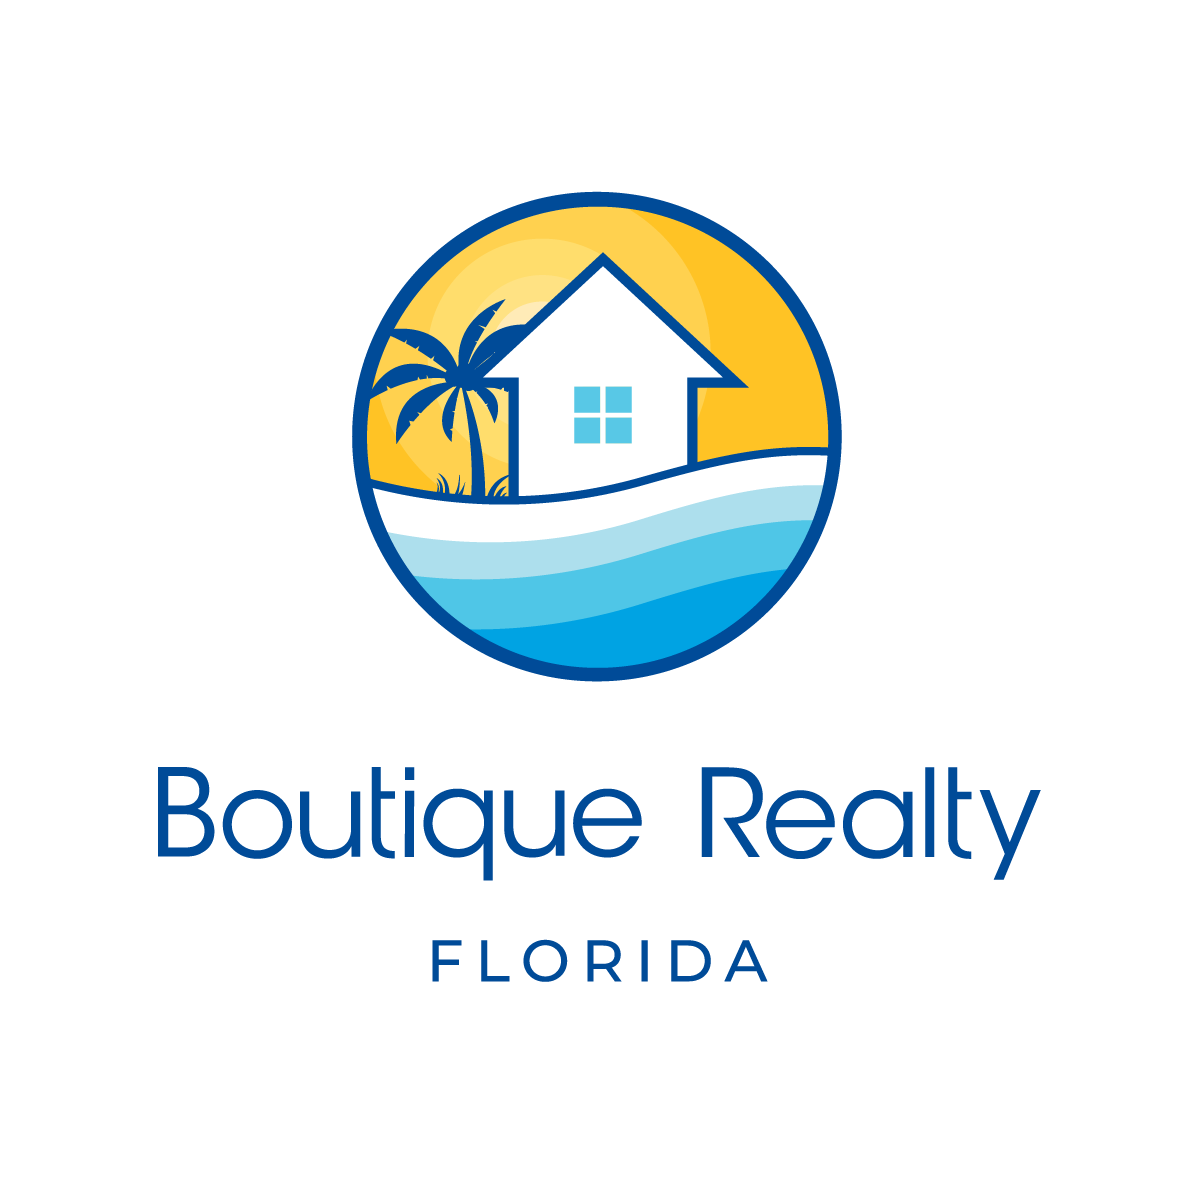 Boutique Realty Florida